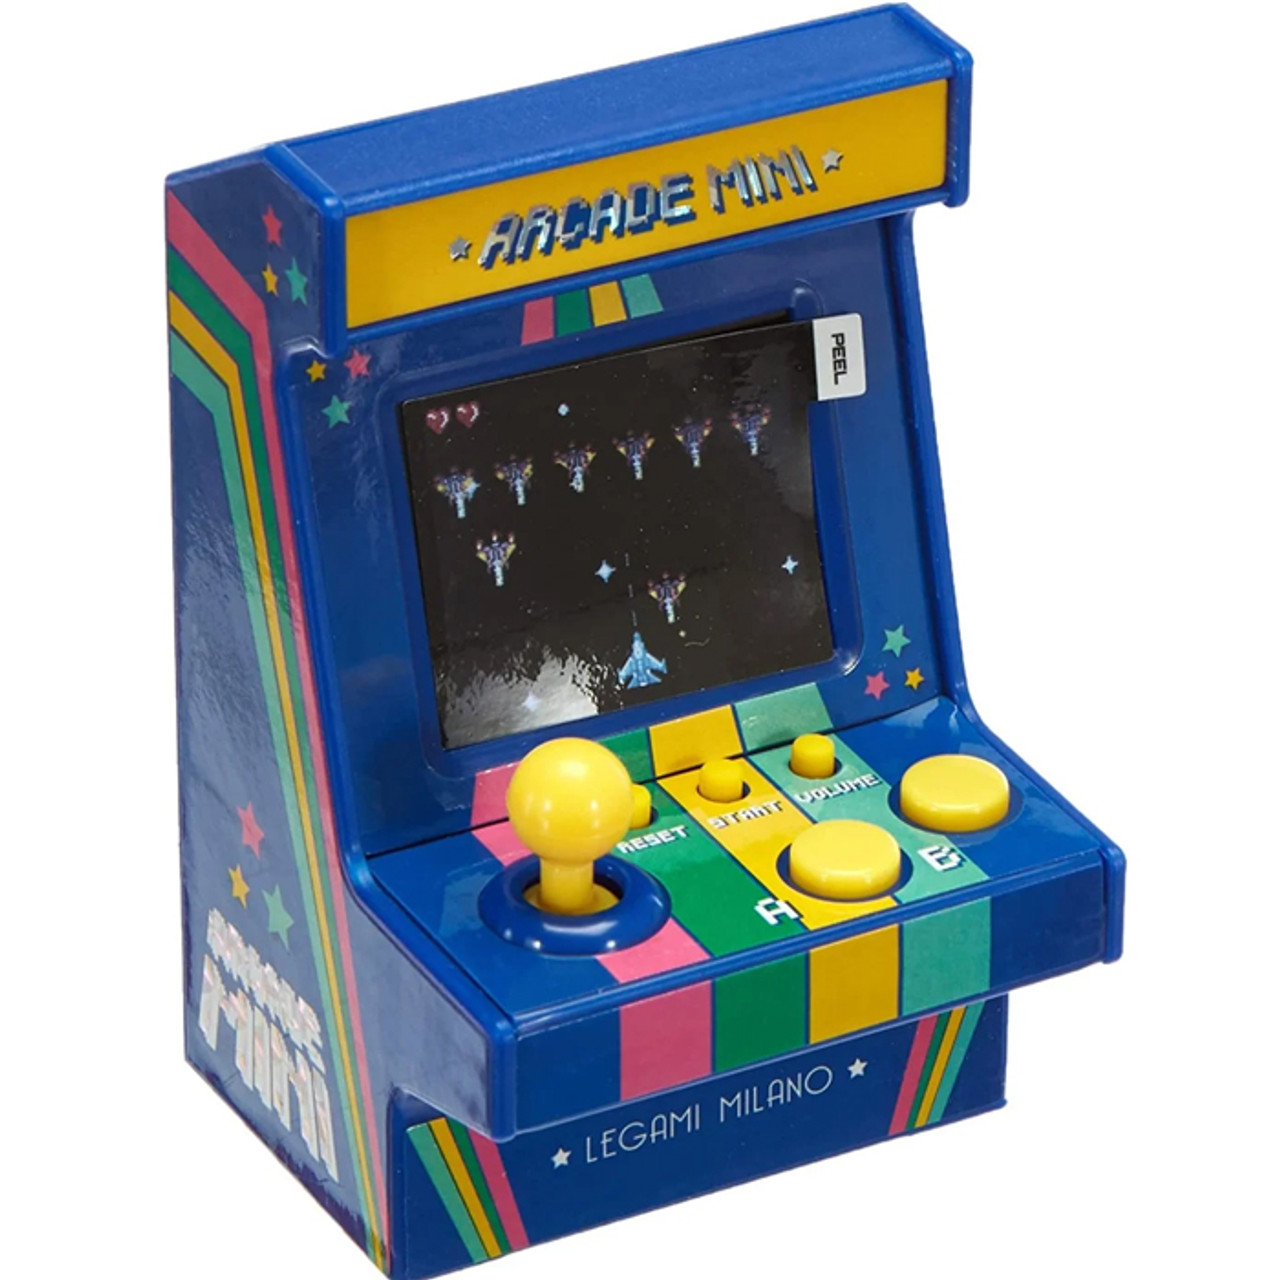 Mini Video Game Arcade *in-store